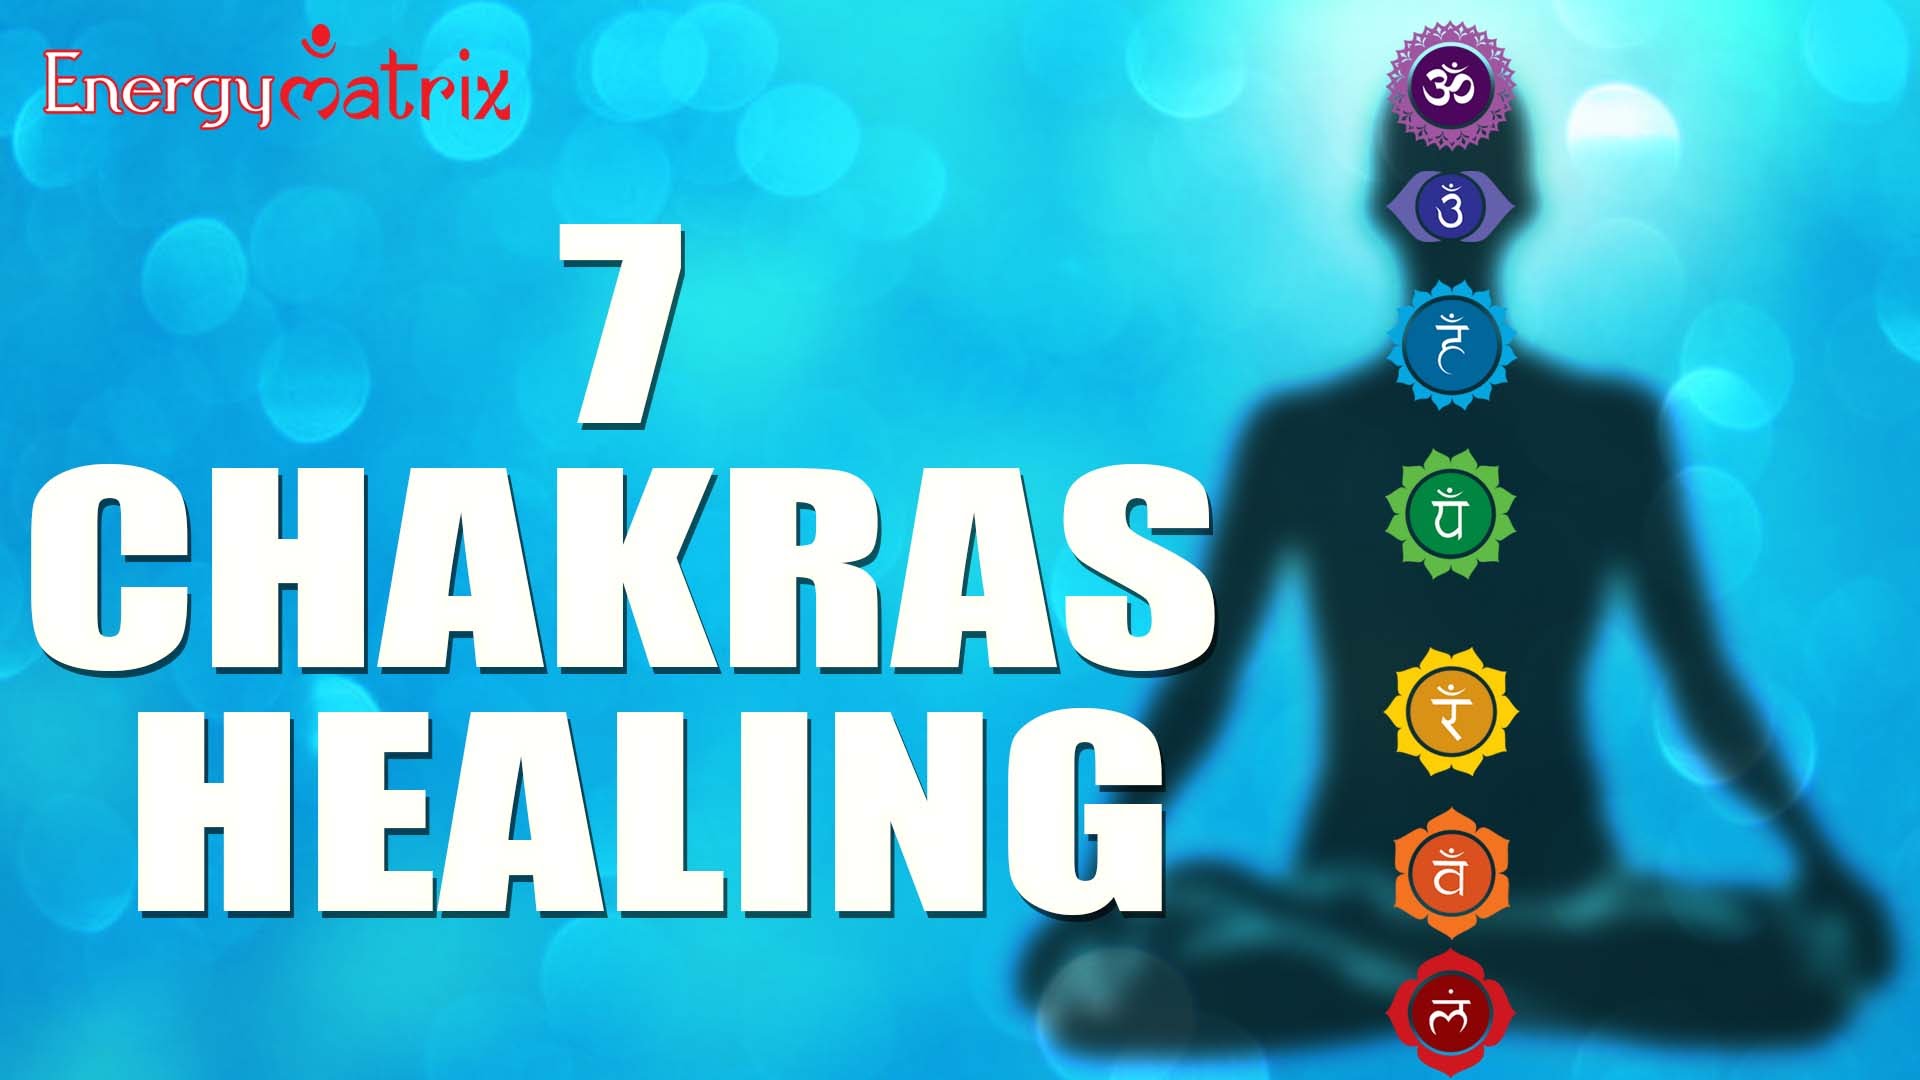 7 Chakras Healing - Hindi Version - Harpreet Kaur Kandhari - Energy Matrix - Meditation